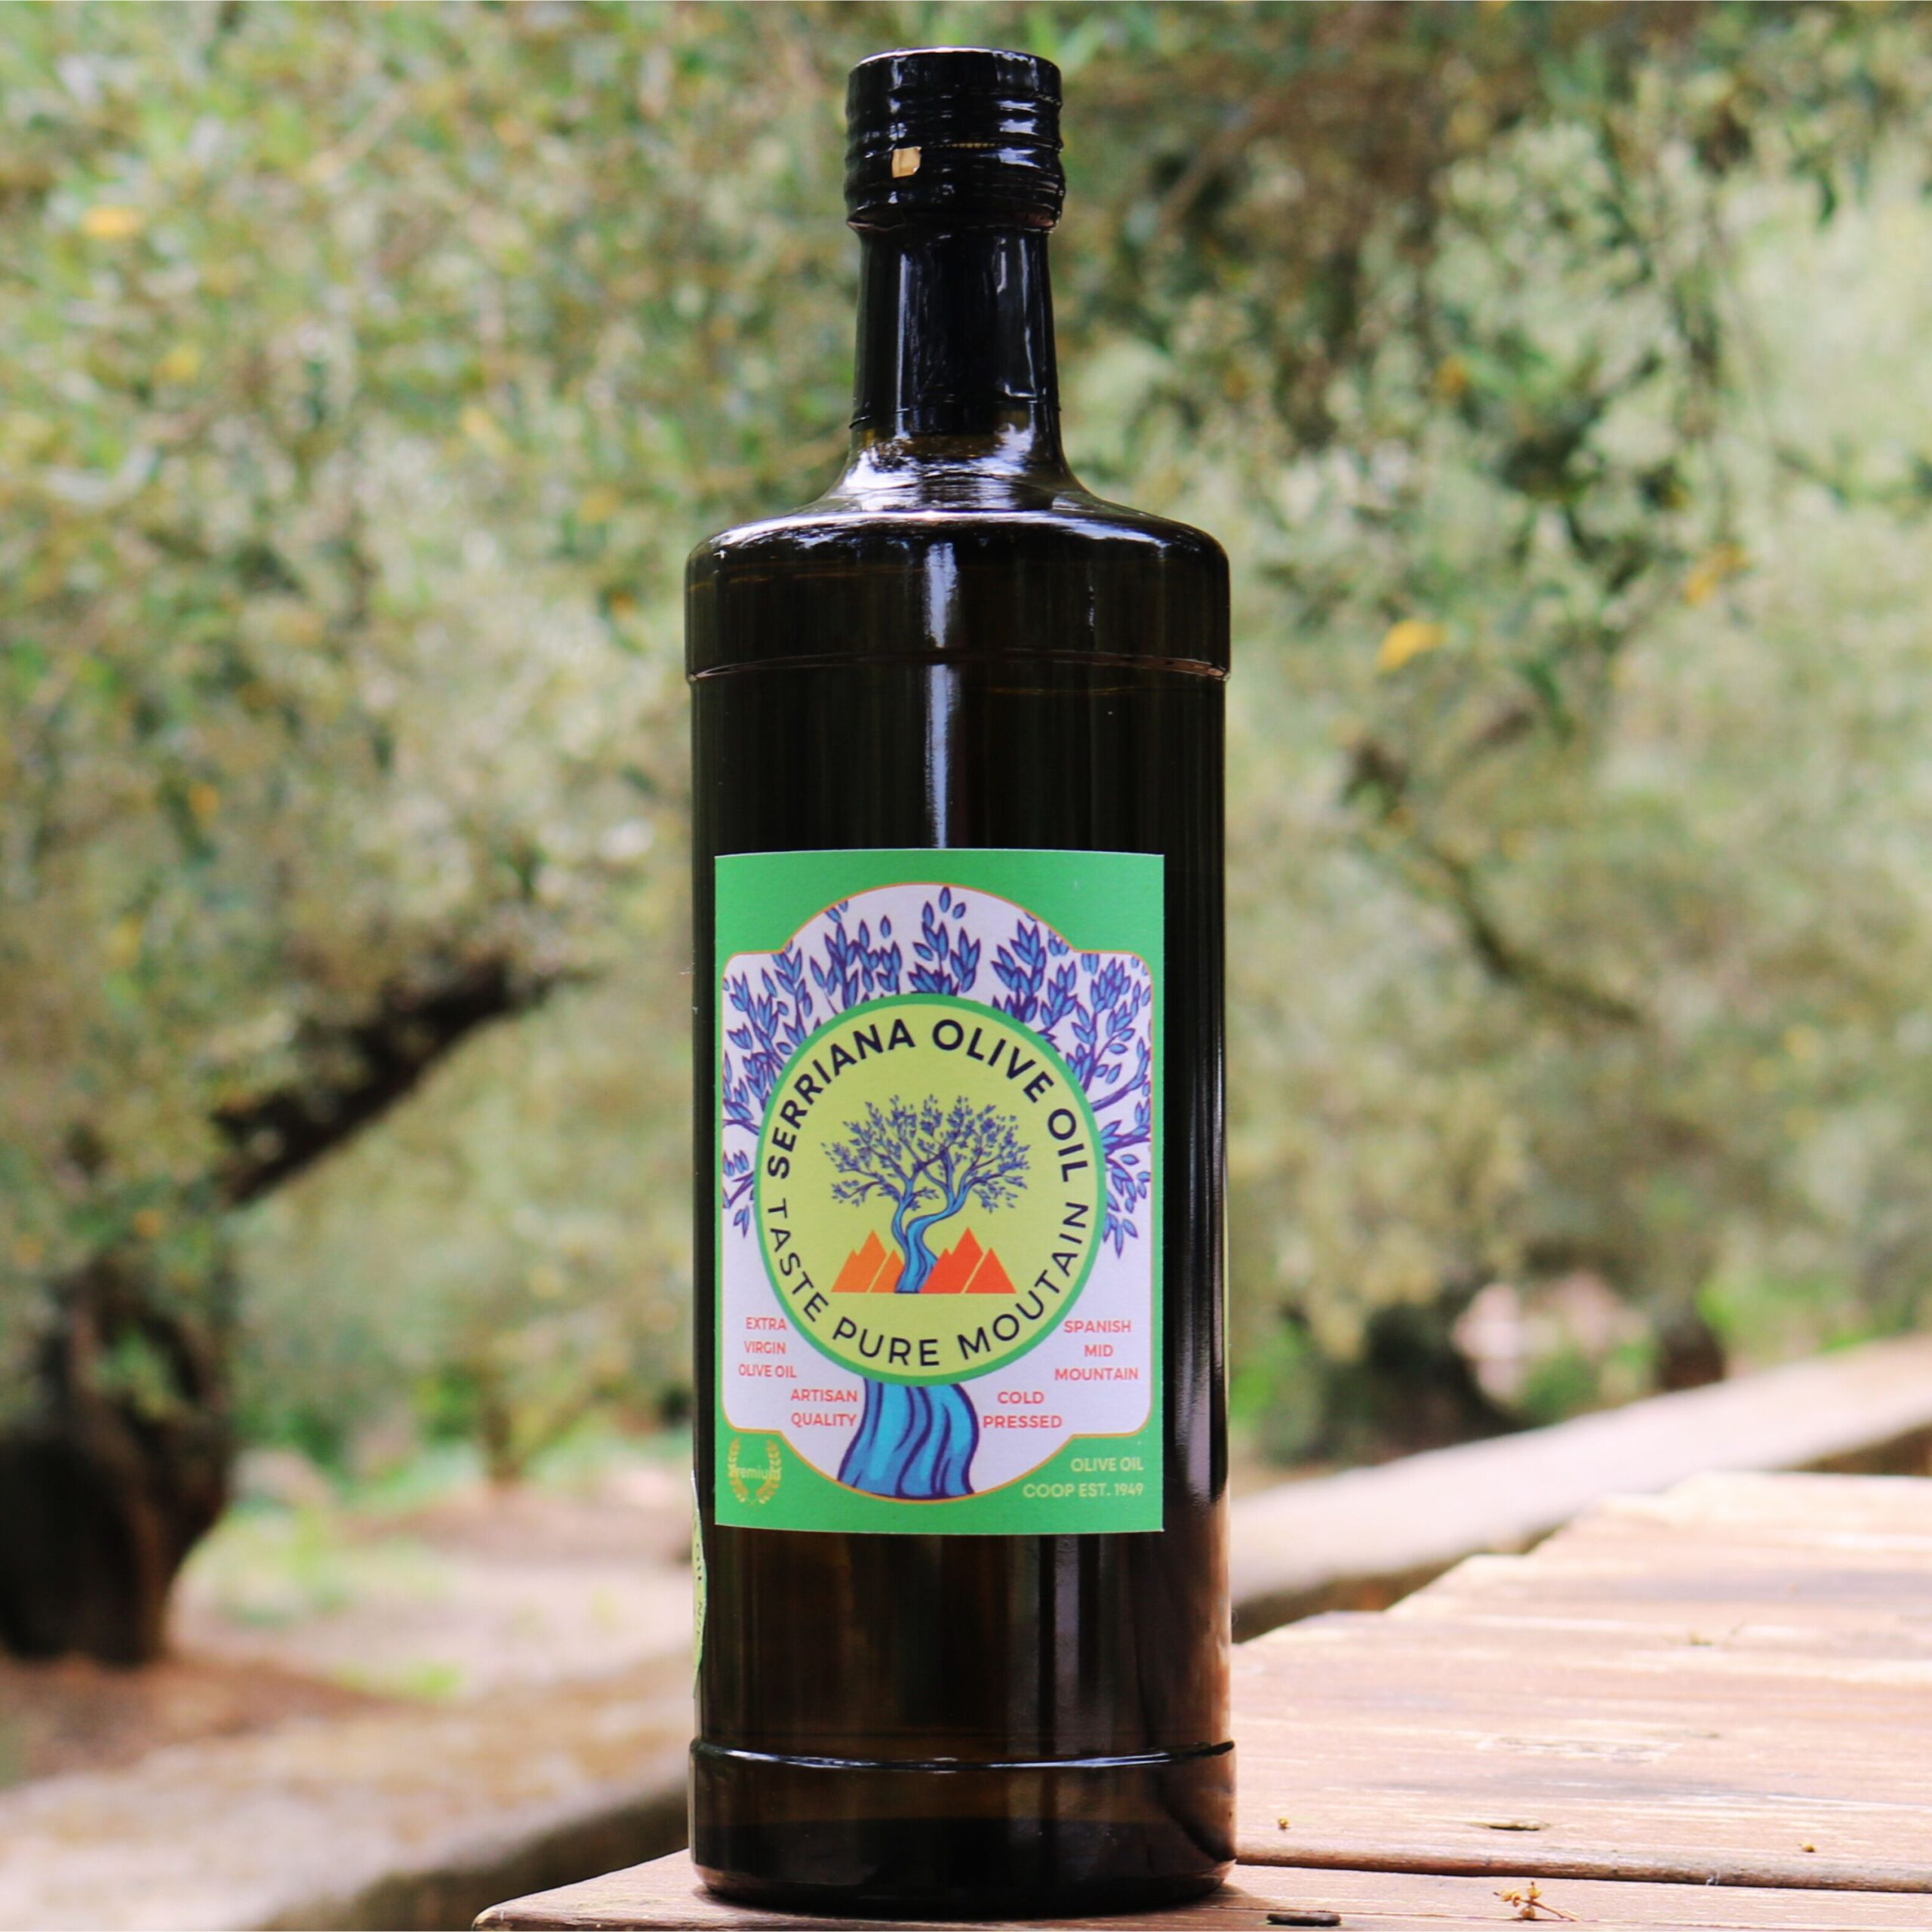 Serriana olive oil - 750ml Argos glass bottle